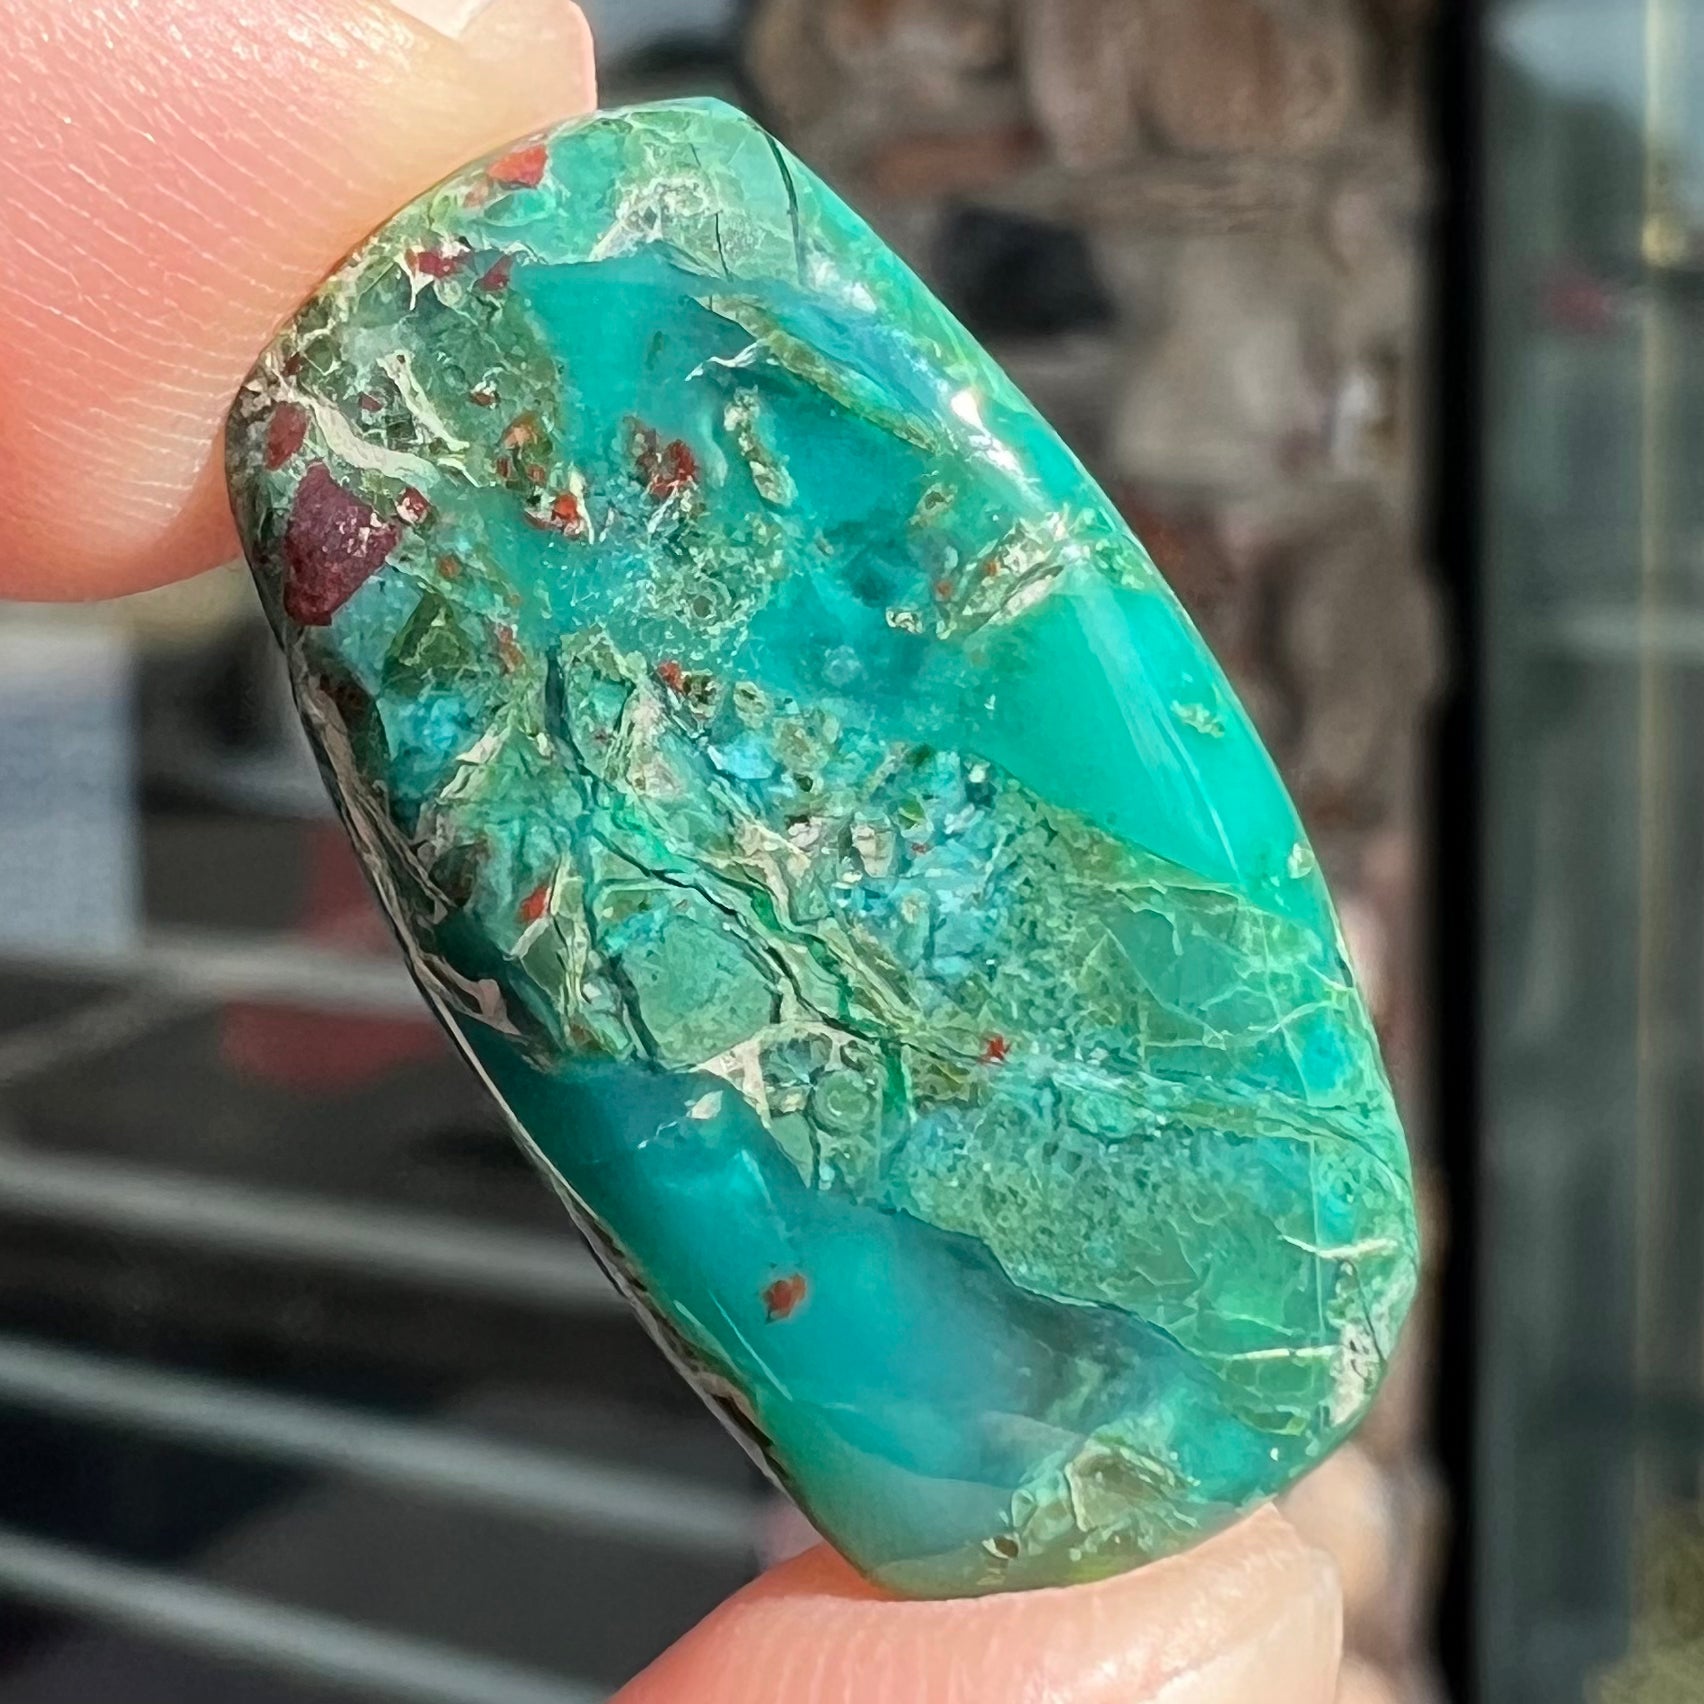 A loose, green, barrel cabochon shaped chrysocolla stone from Morenci, Arizona.